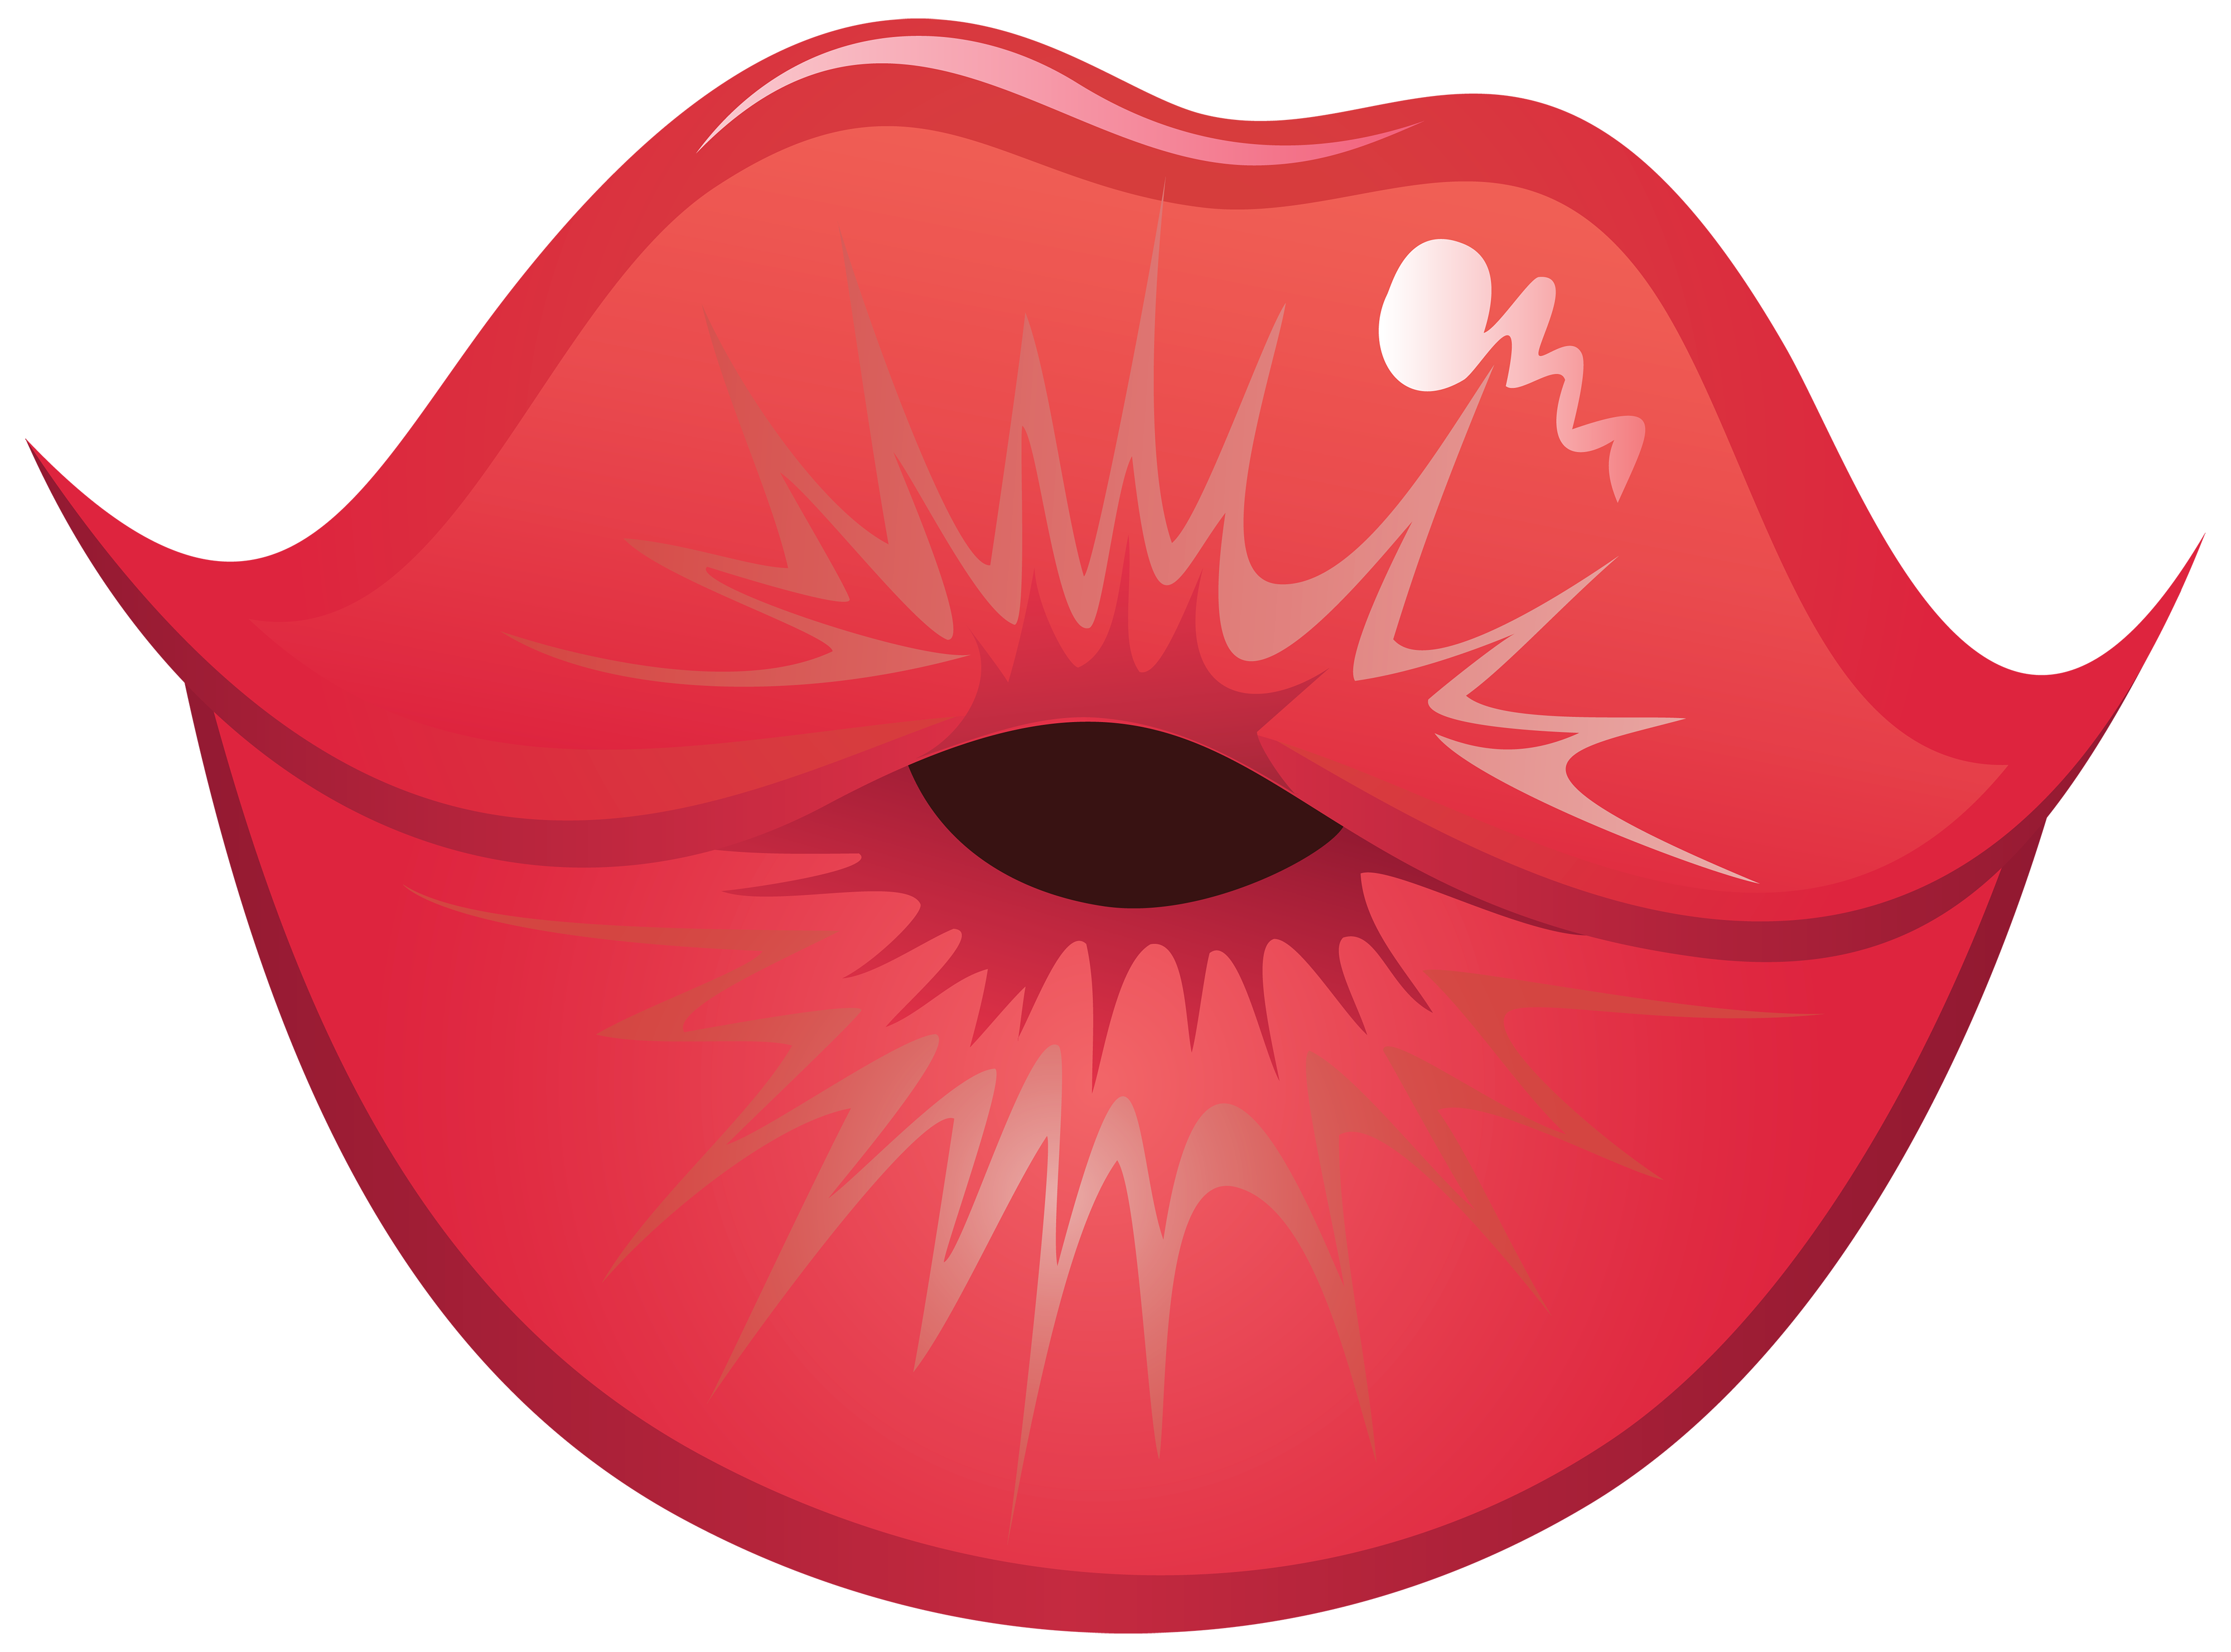 Kiss Lips Png Clipart Best Web Clipart